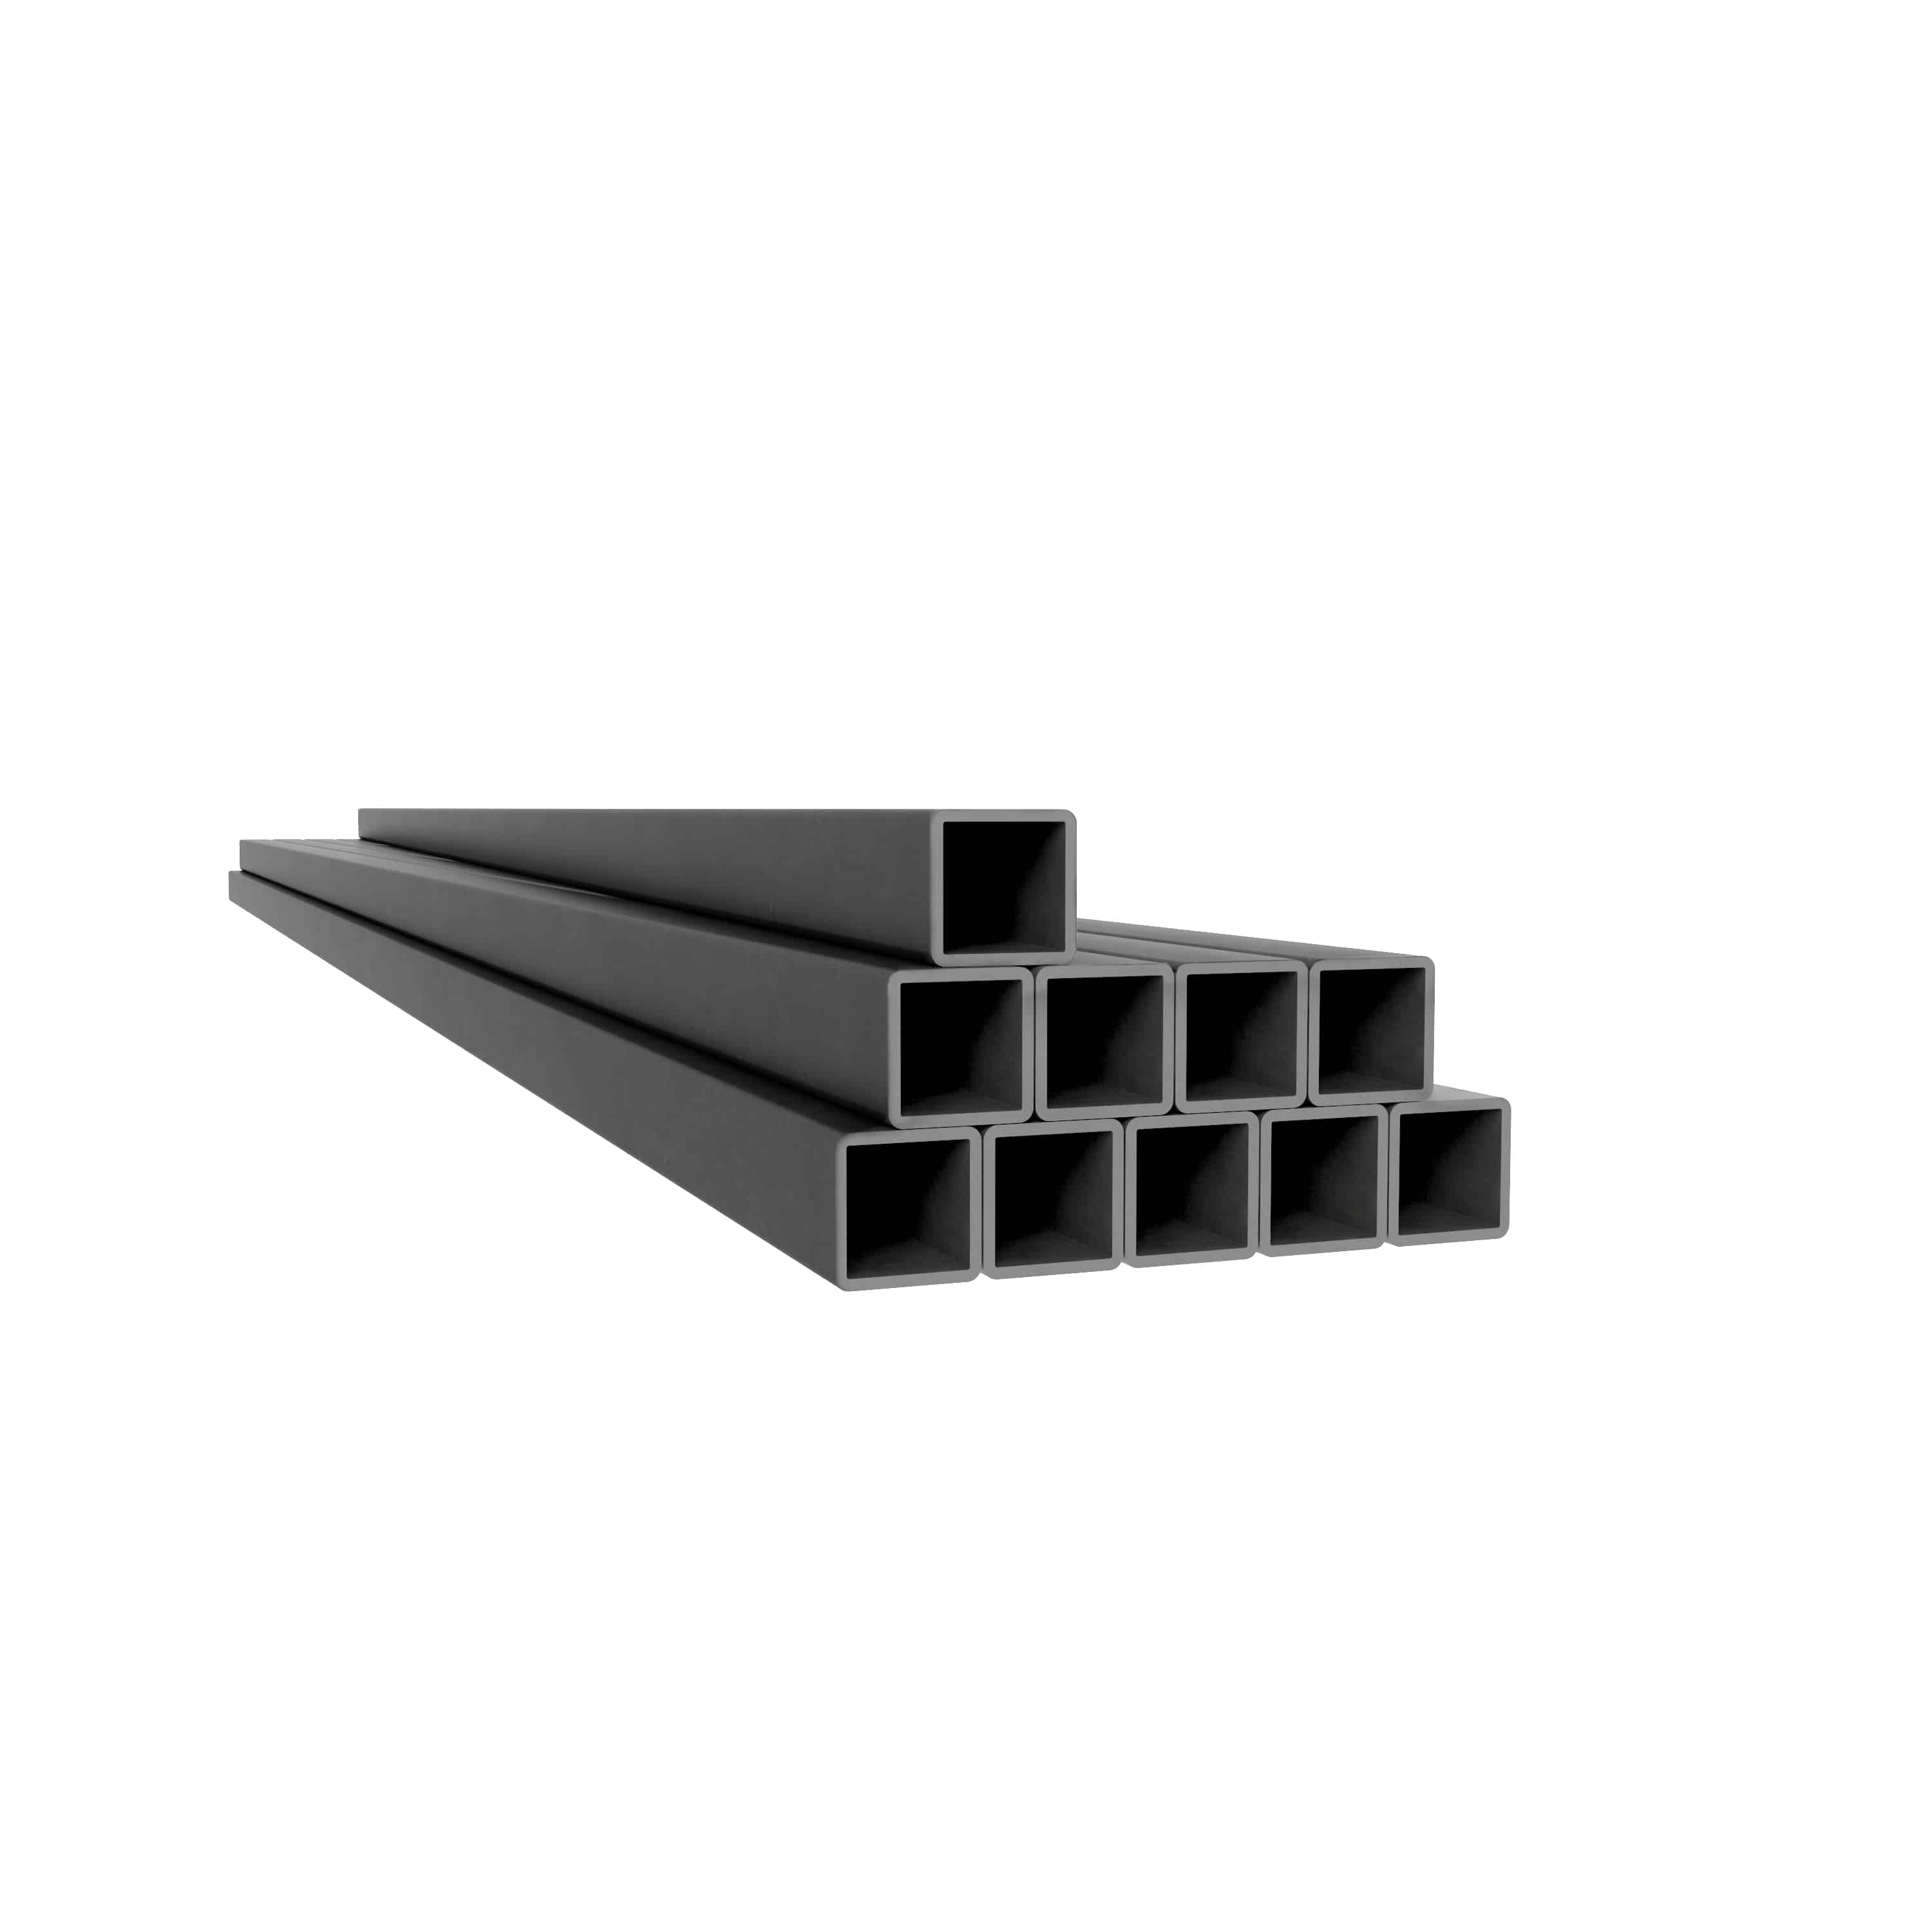 Square Pipe - Square pipe 100 x 100 x 6 mm S235-6LM, https:maxbau.ro